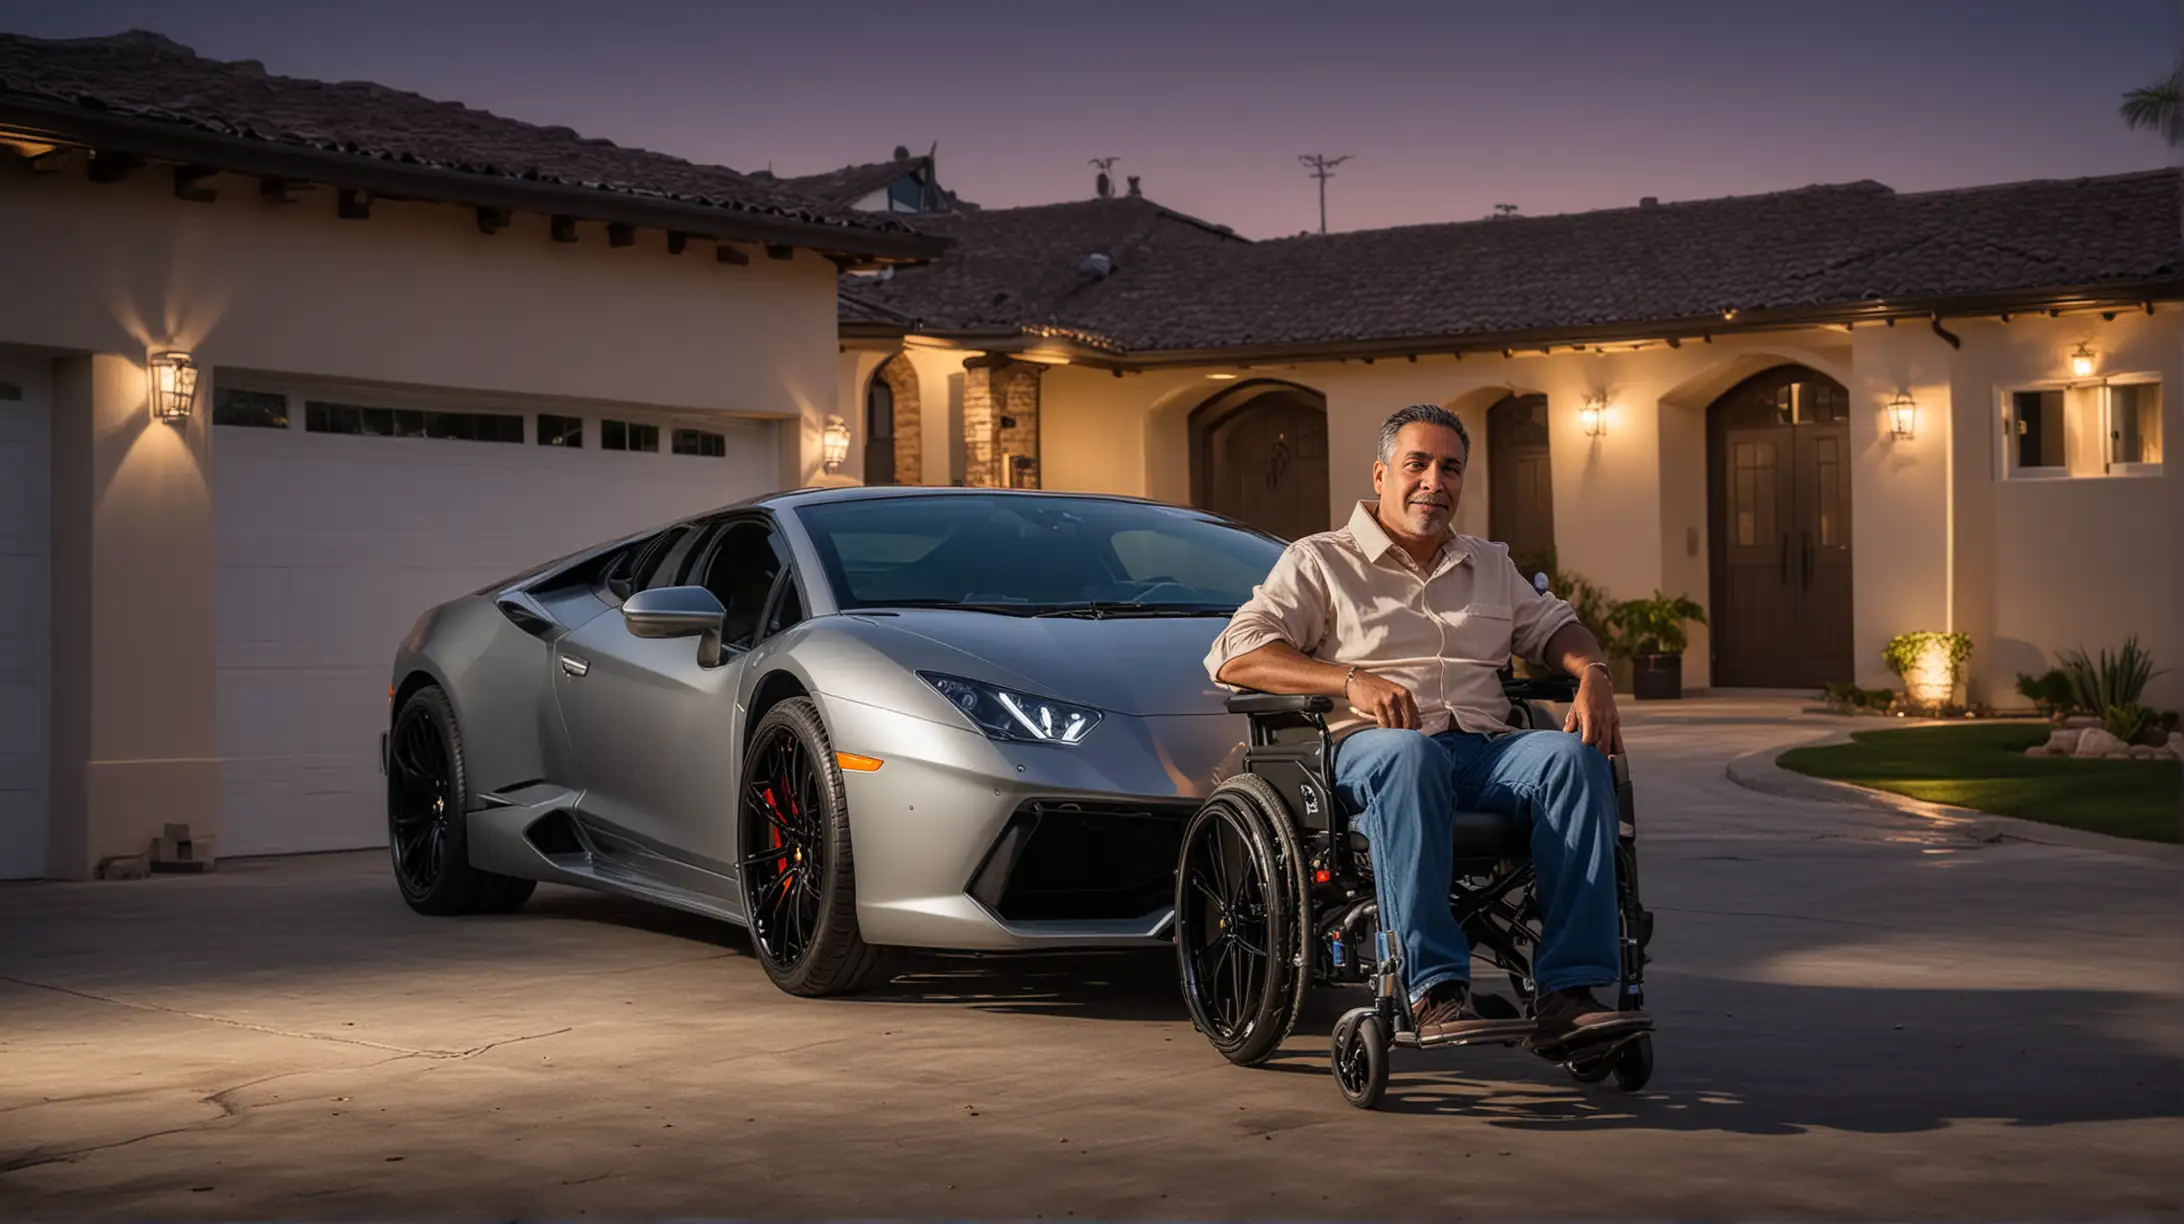 Middle Age Hispanic Man in Wheelchair with New Lamborghini in Driveway